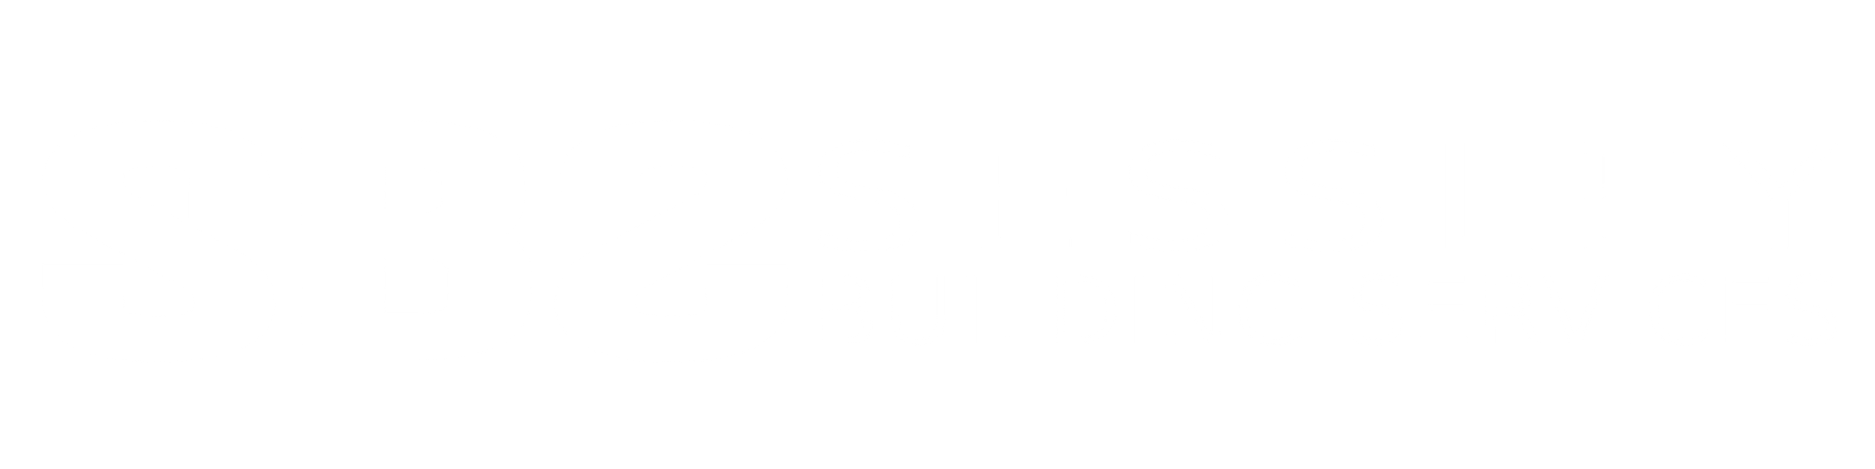 Sessley Building Services Logo